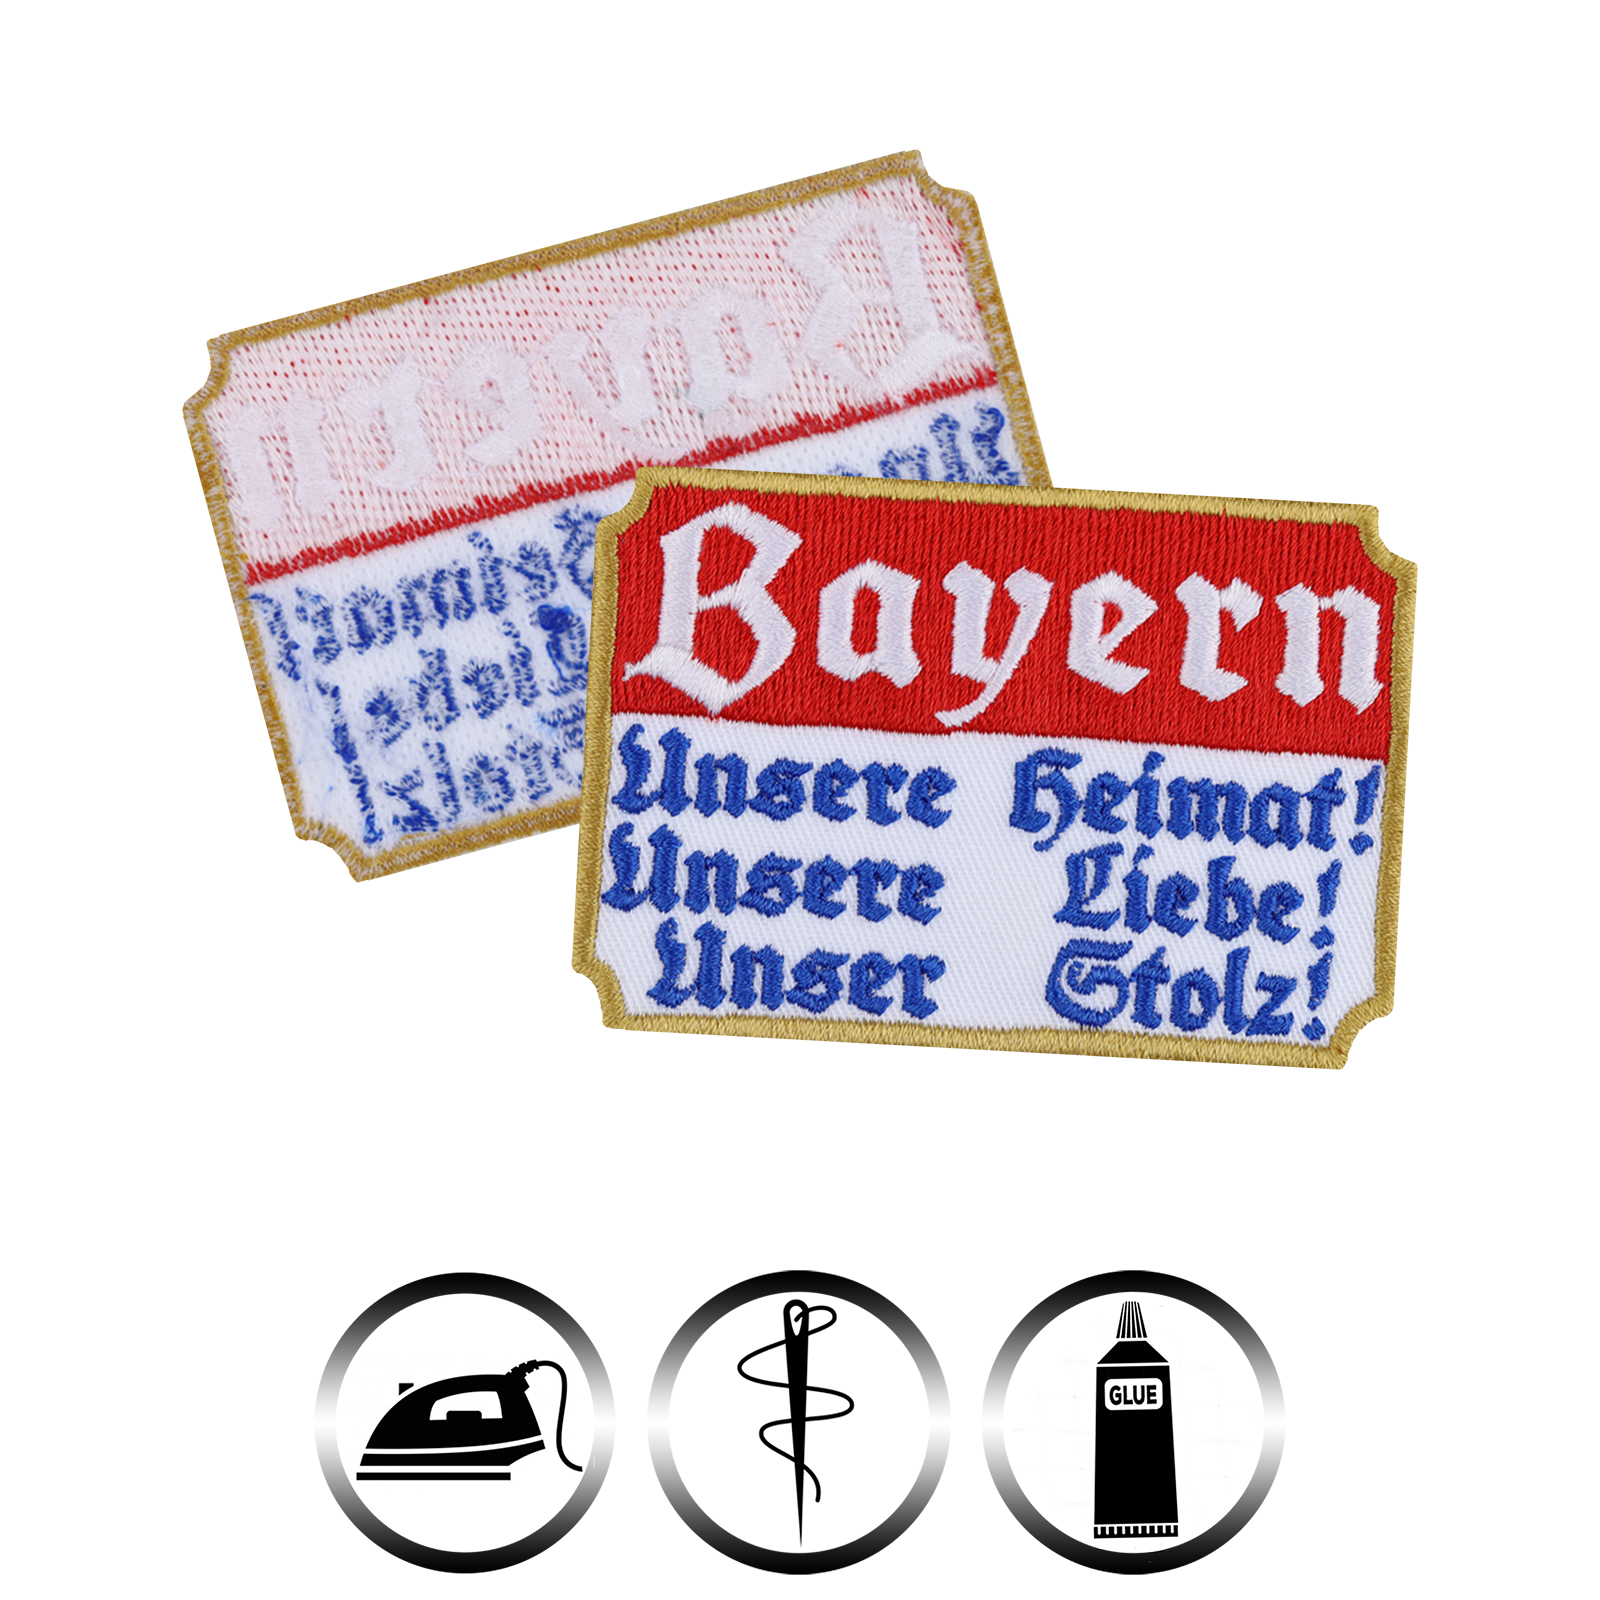 Bayern - Unsere Heimat, unsere Liebe, unser Stolz - Patch